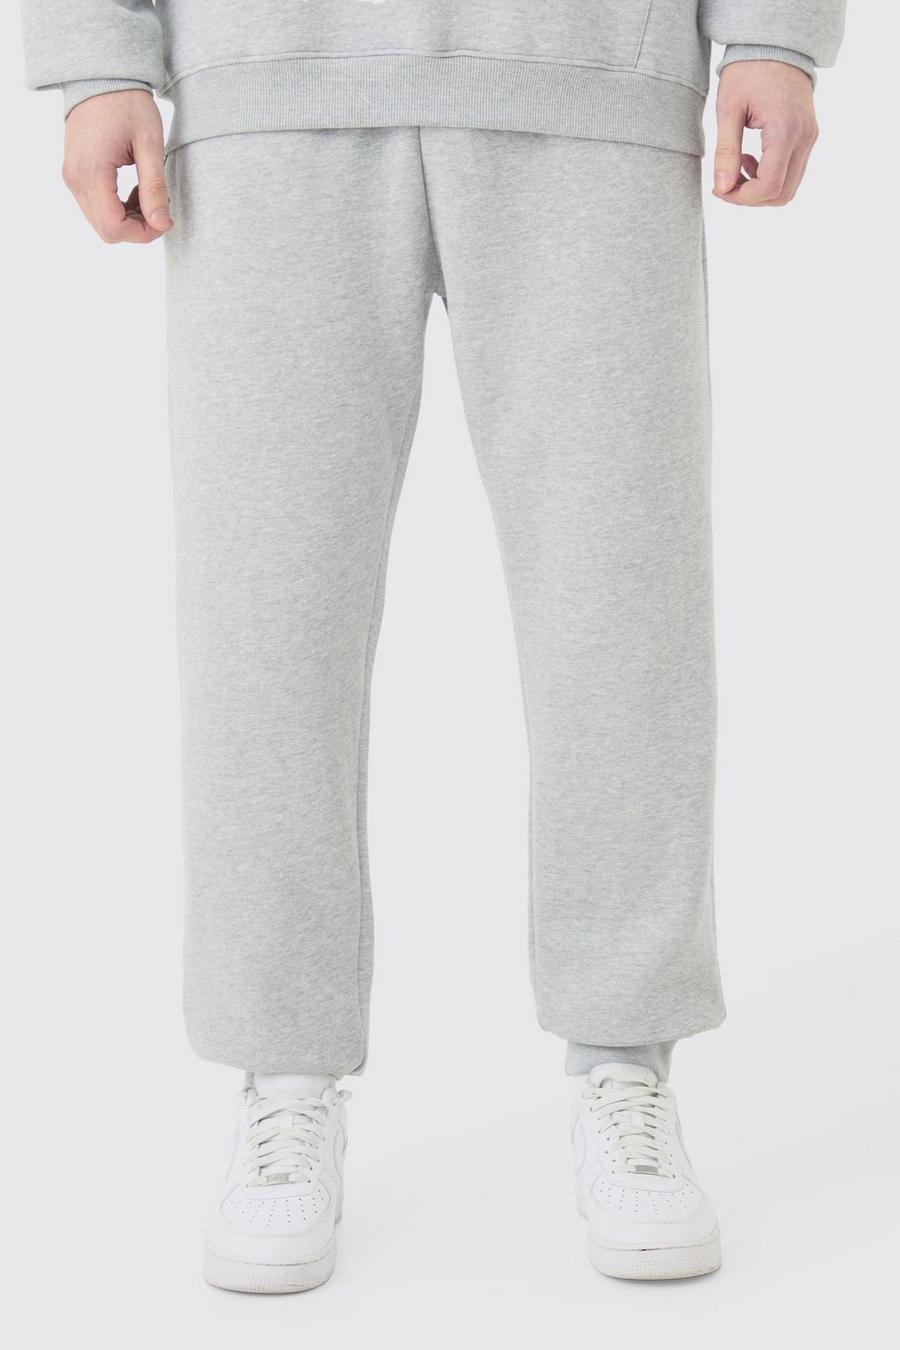 Pantalón deportivo Tall básico en gris jaspeado, Grey marl